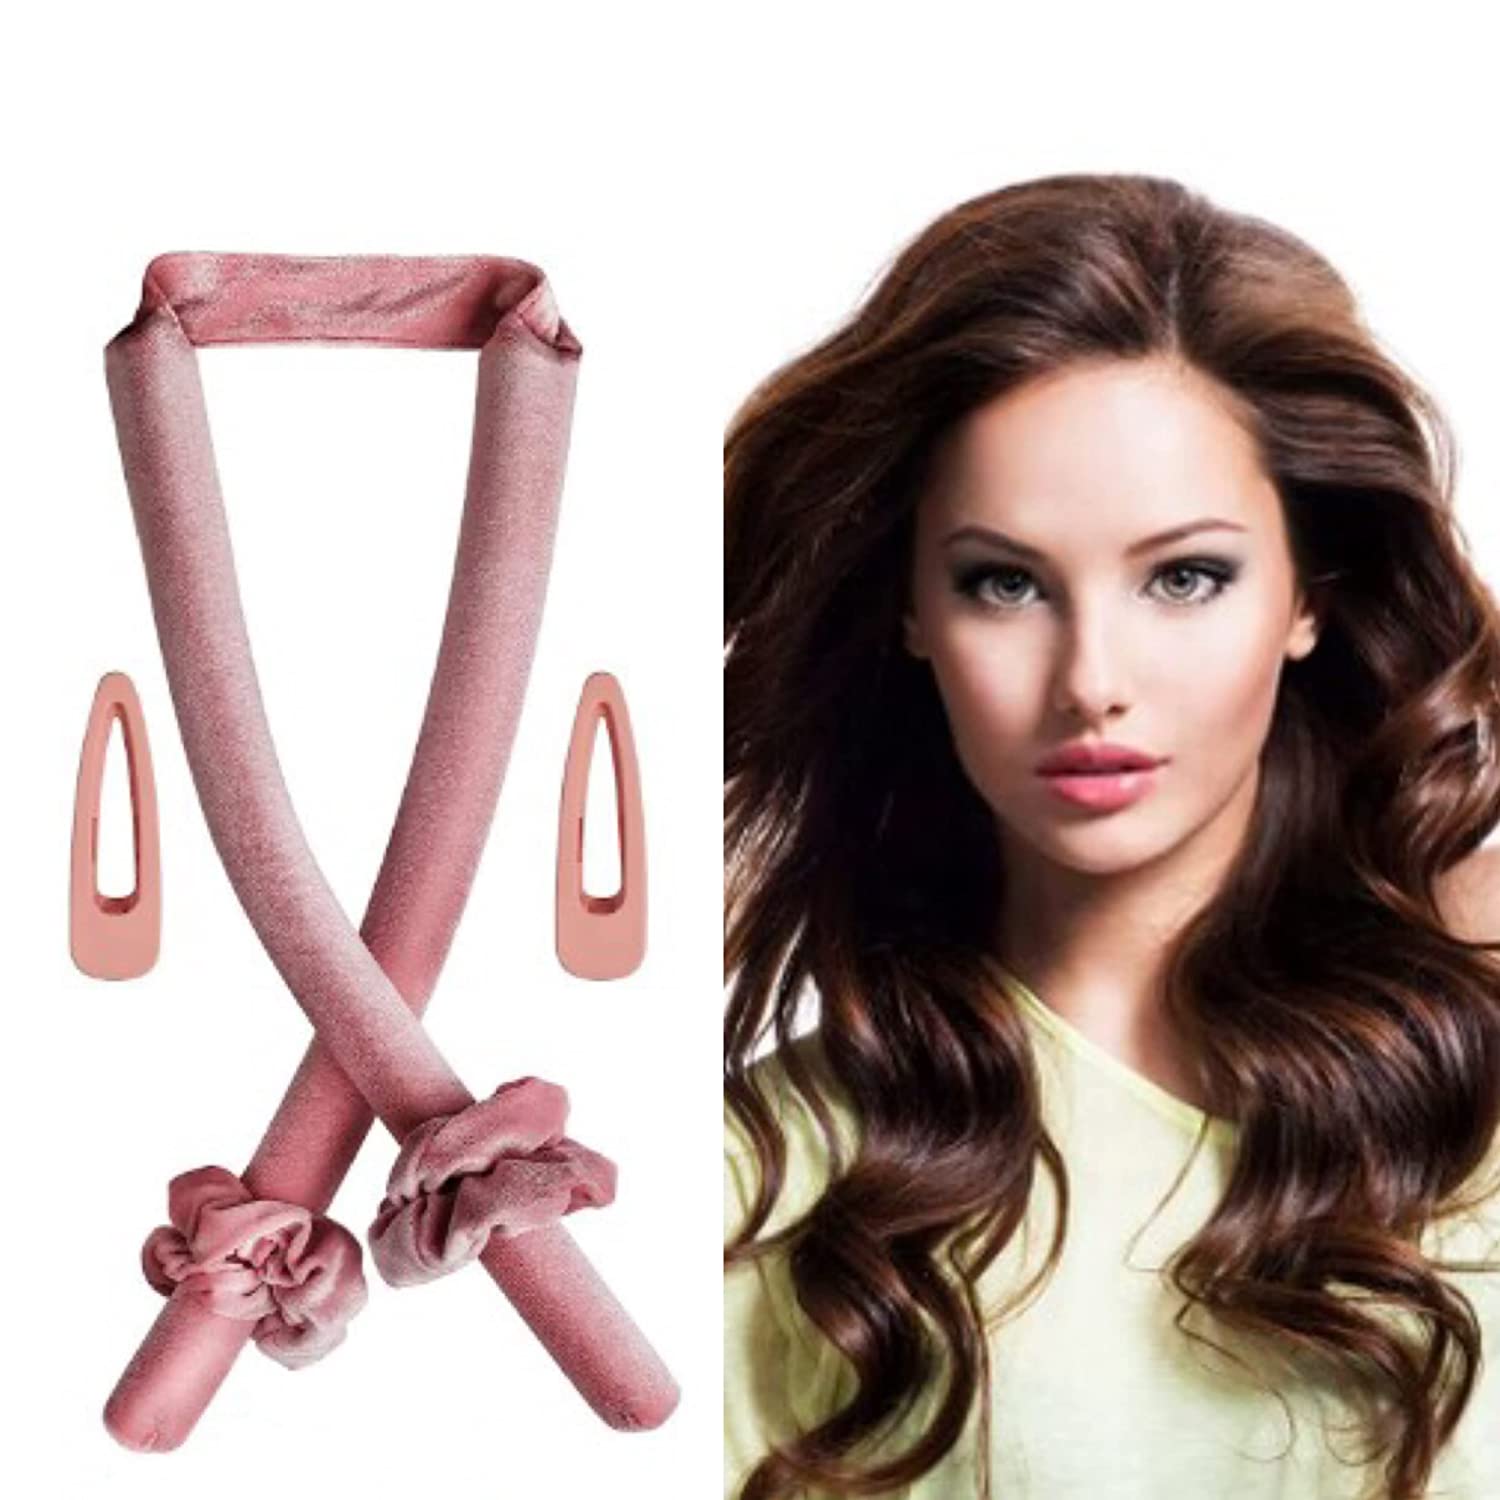 LEBEXY New Curler Curls Without Heat, Velvet Curlers, DIY Hair Curls Without Heat Hairstyle Set, for Long Medium Hair (Pink)